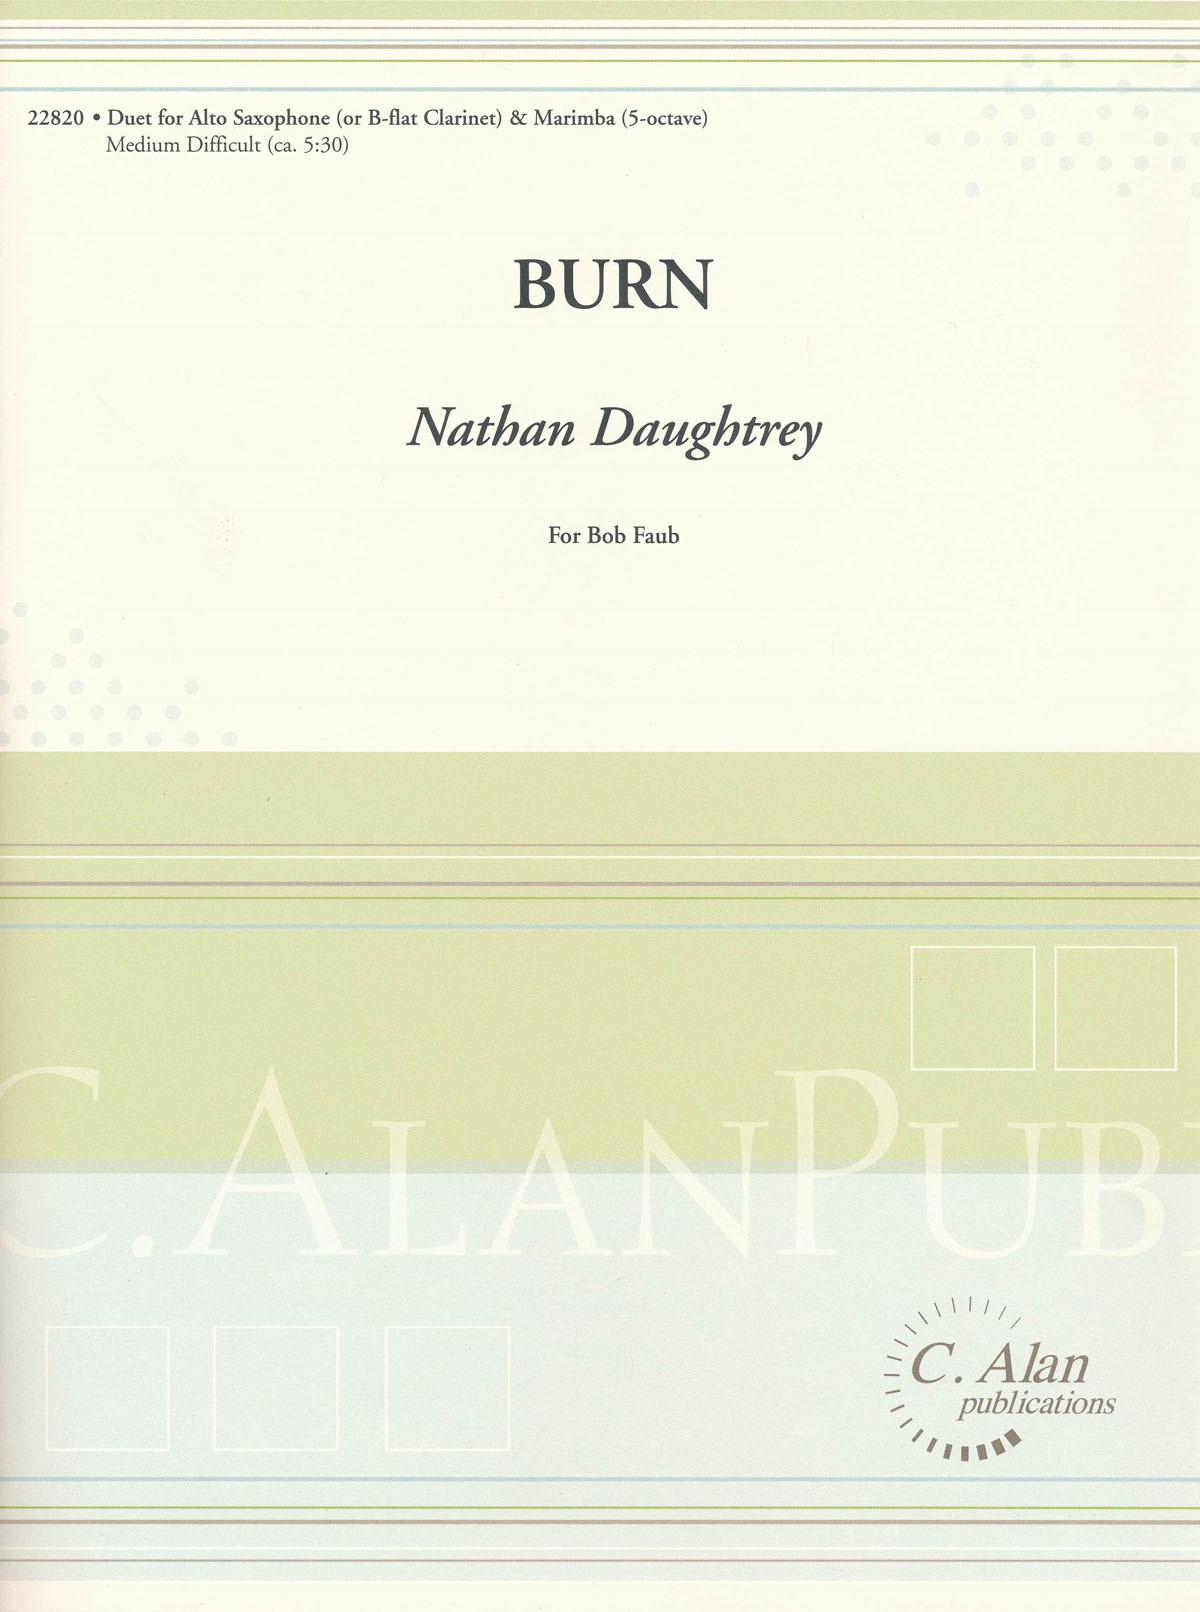 Burn by Nathan Daughtrey